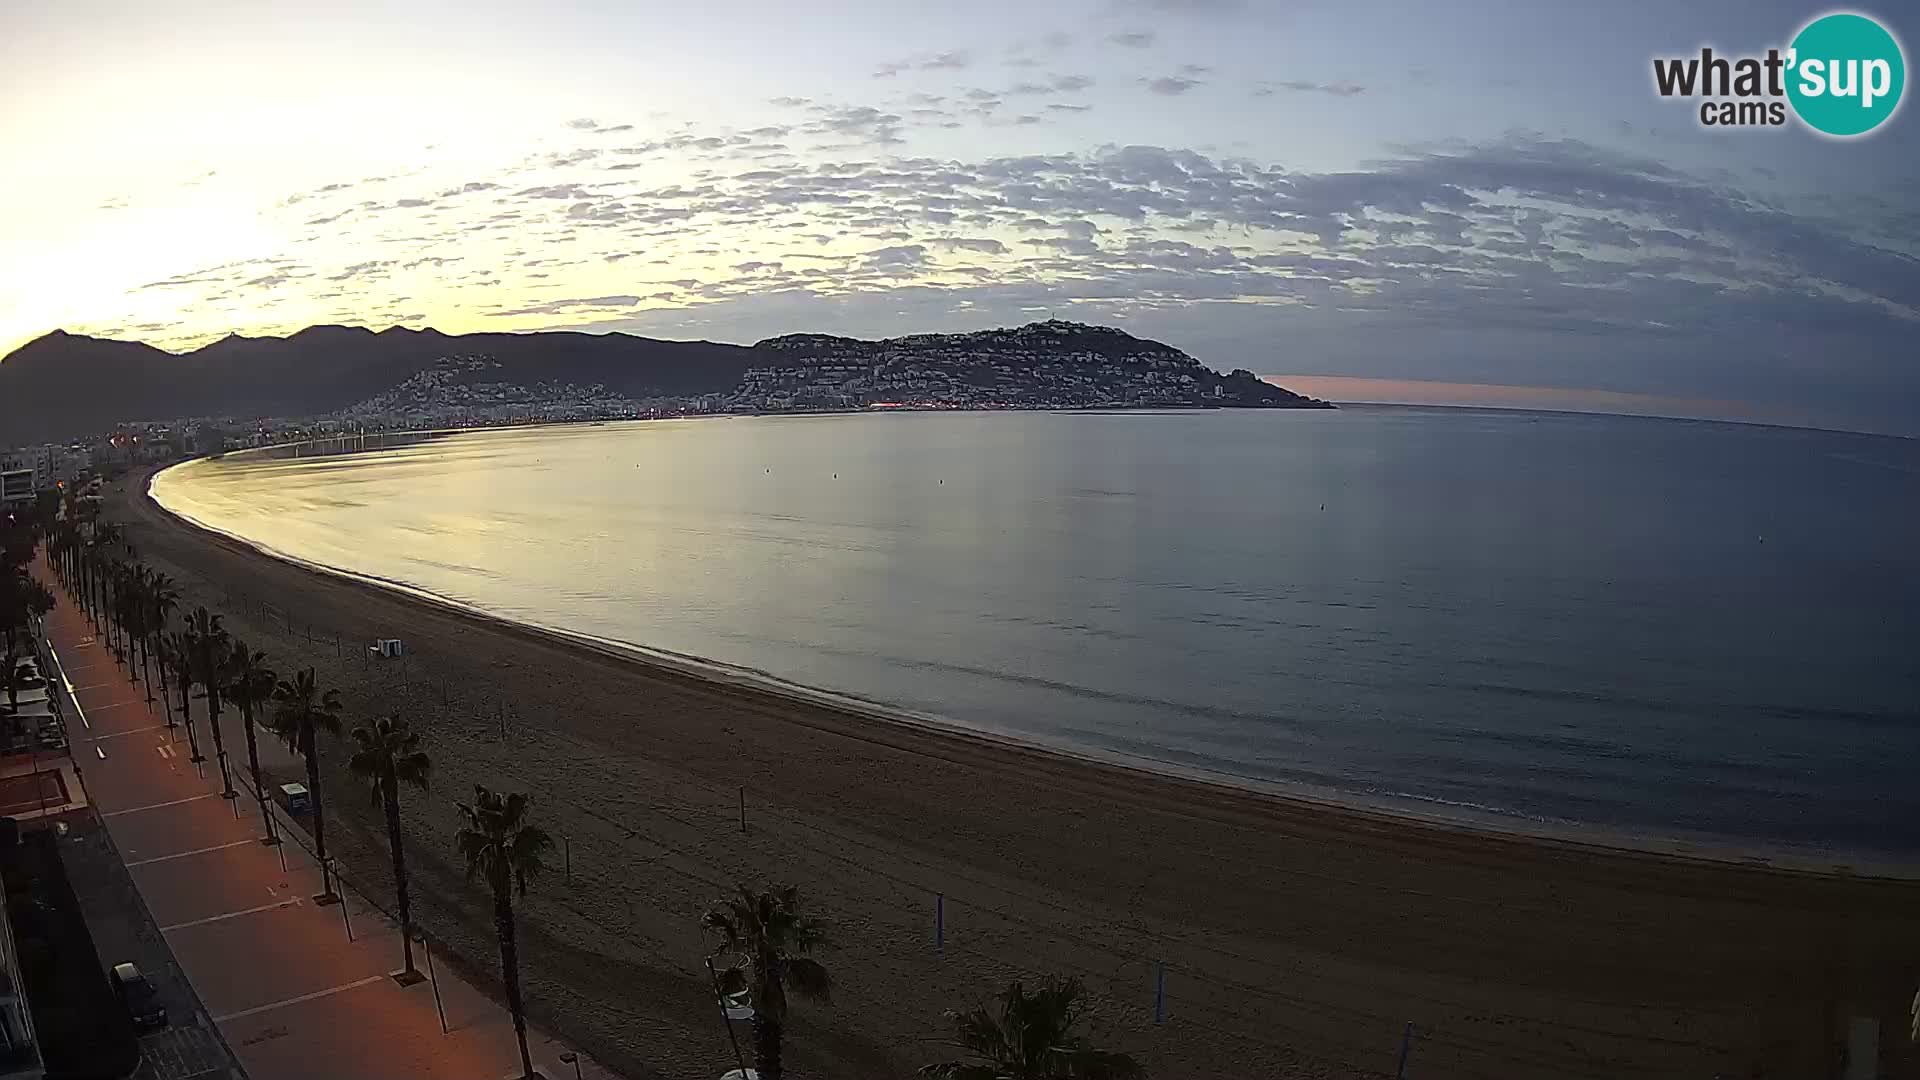 LIVEcam Roses plage Costa Brava – Hotel Montecarlo webcam Espagne